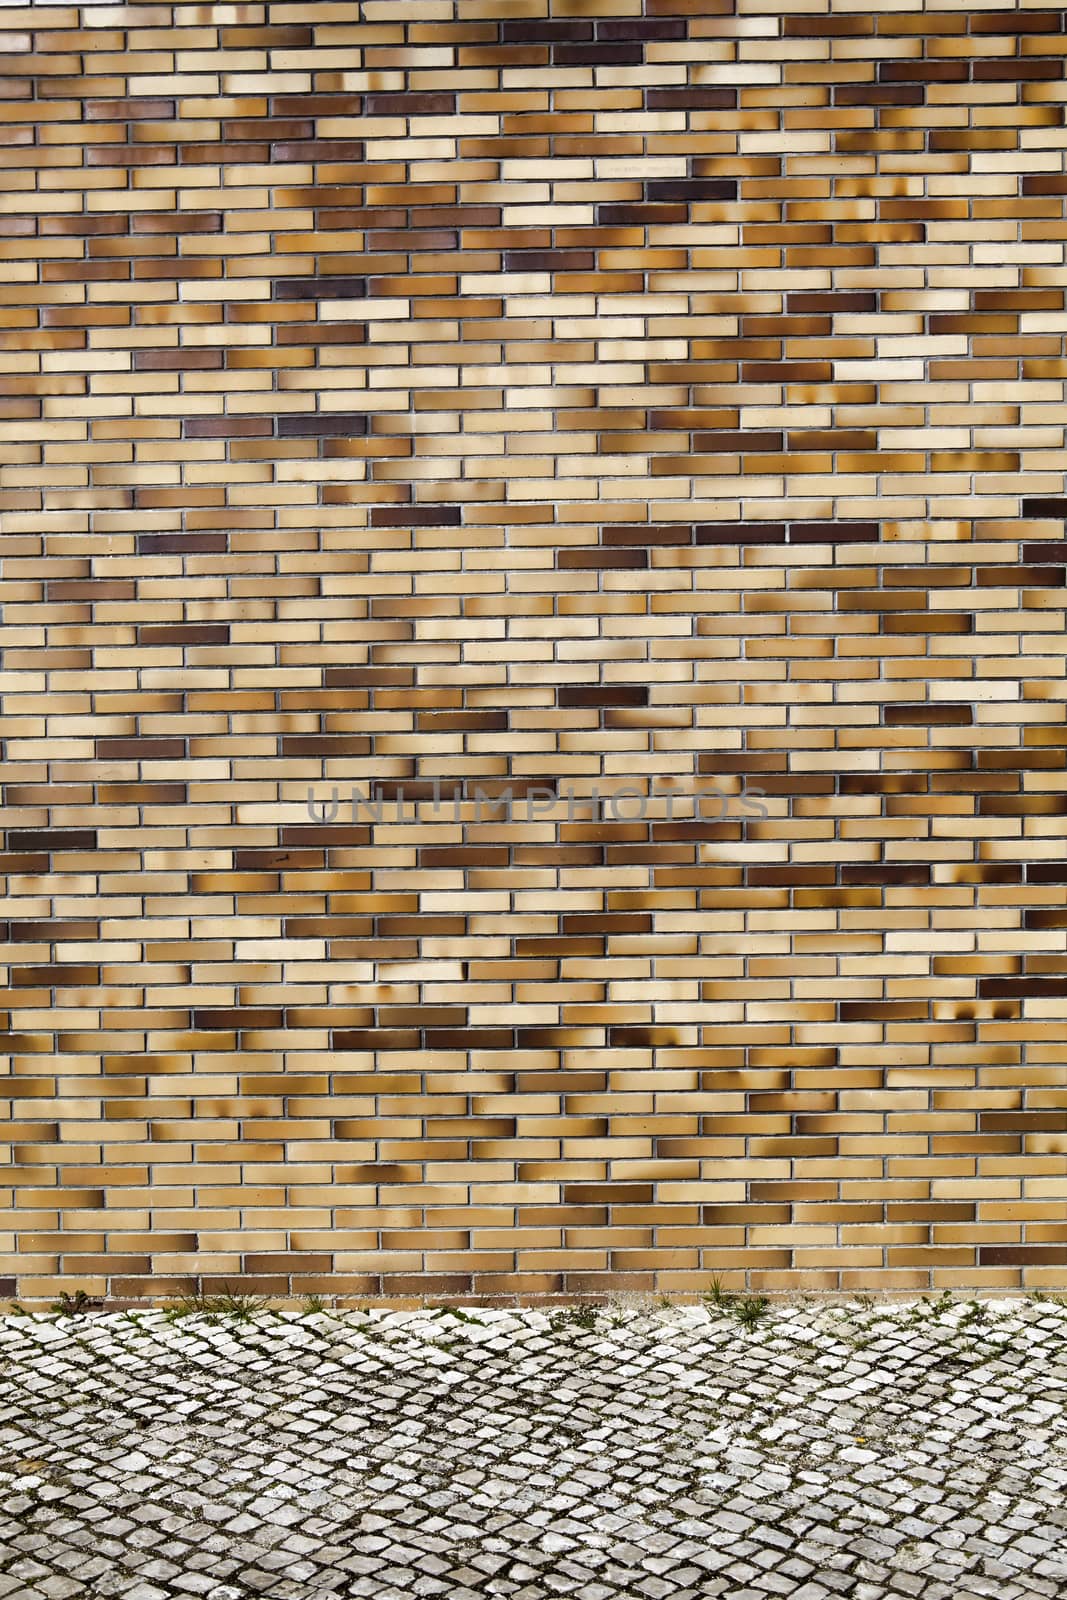 Brick wall, building facade surface as urban background by kalnenko